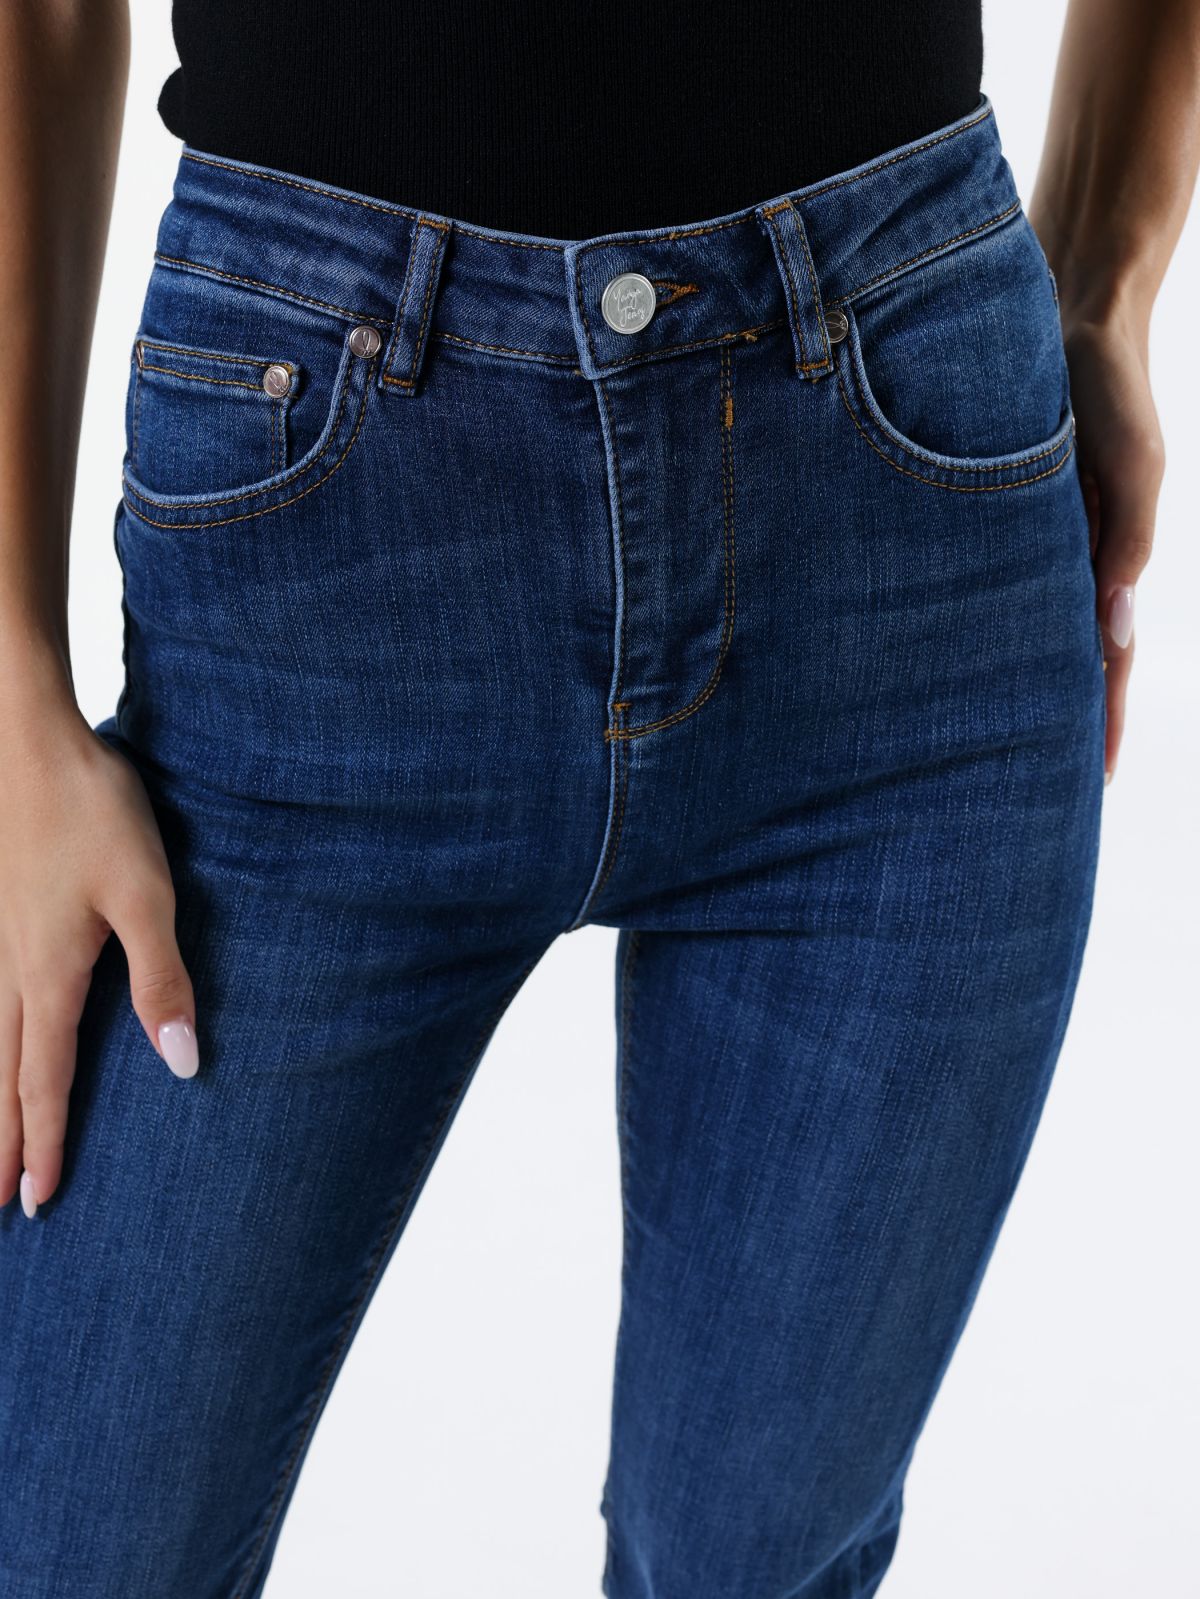  ג'ינס בגזרת סקיני Lily Jeans של YANGA